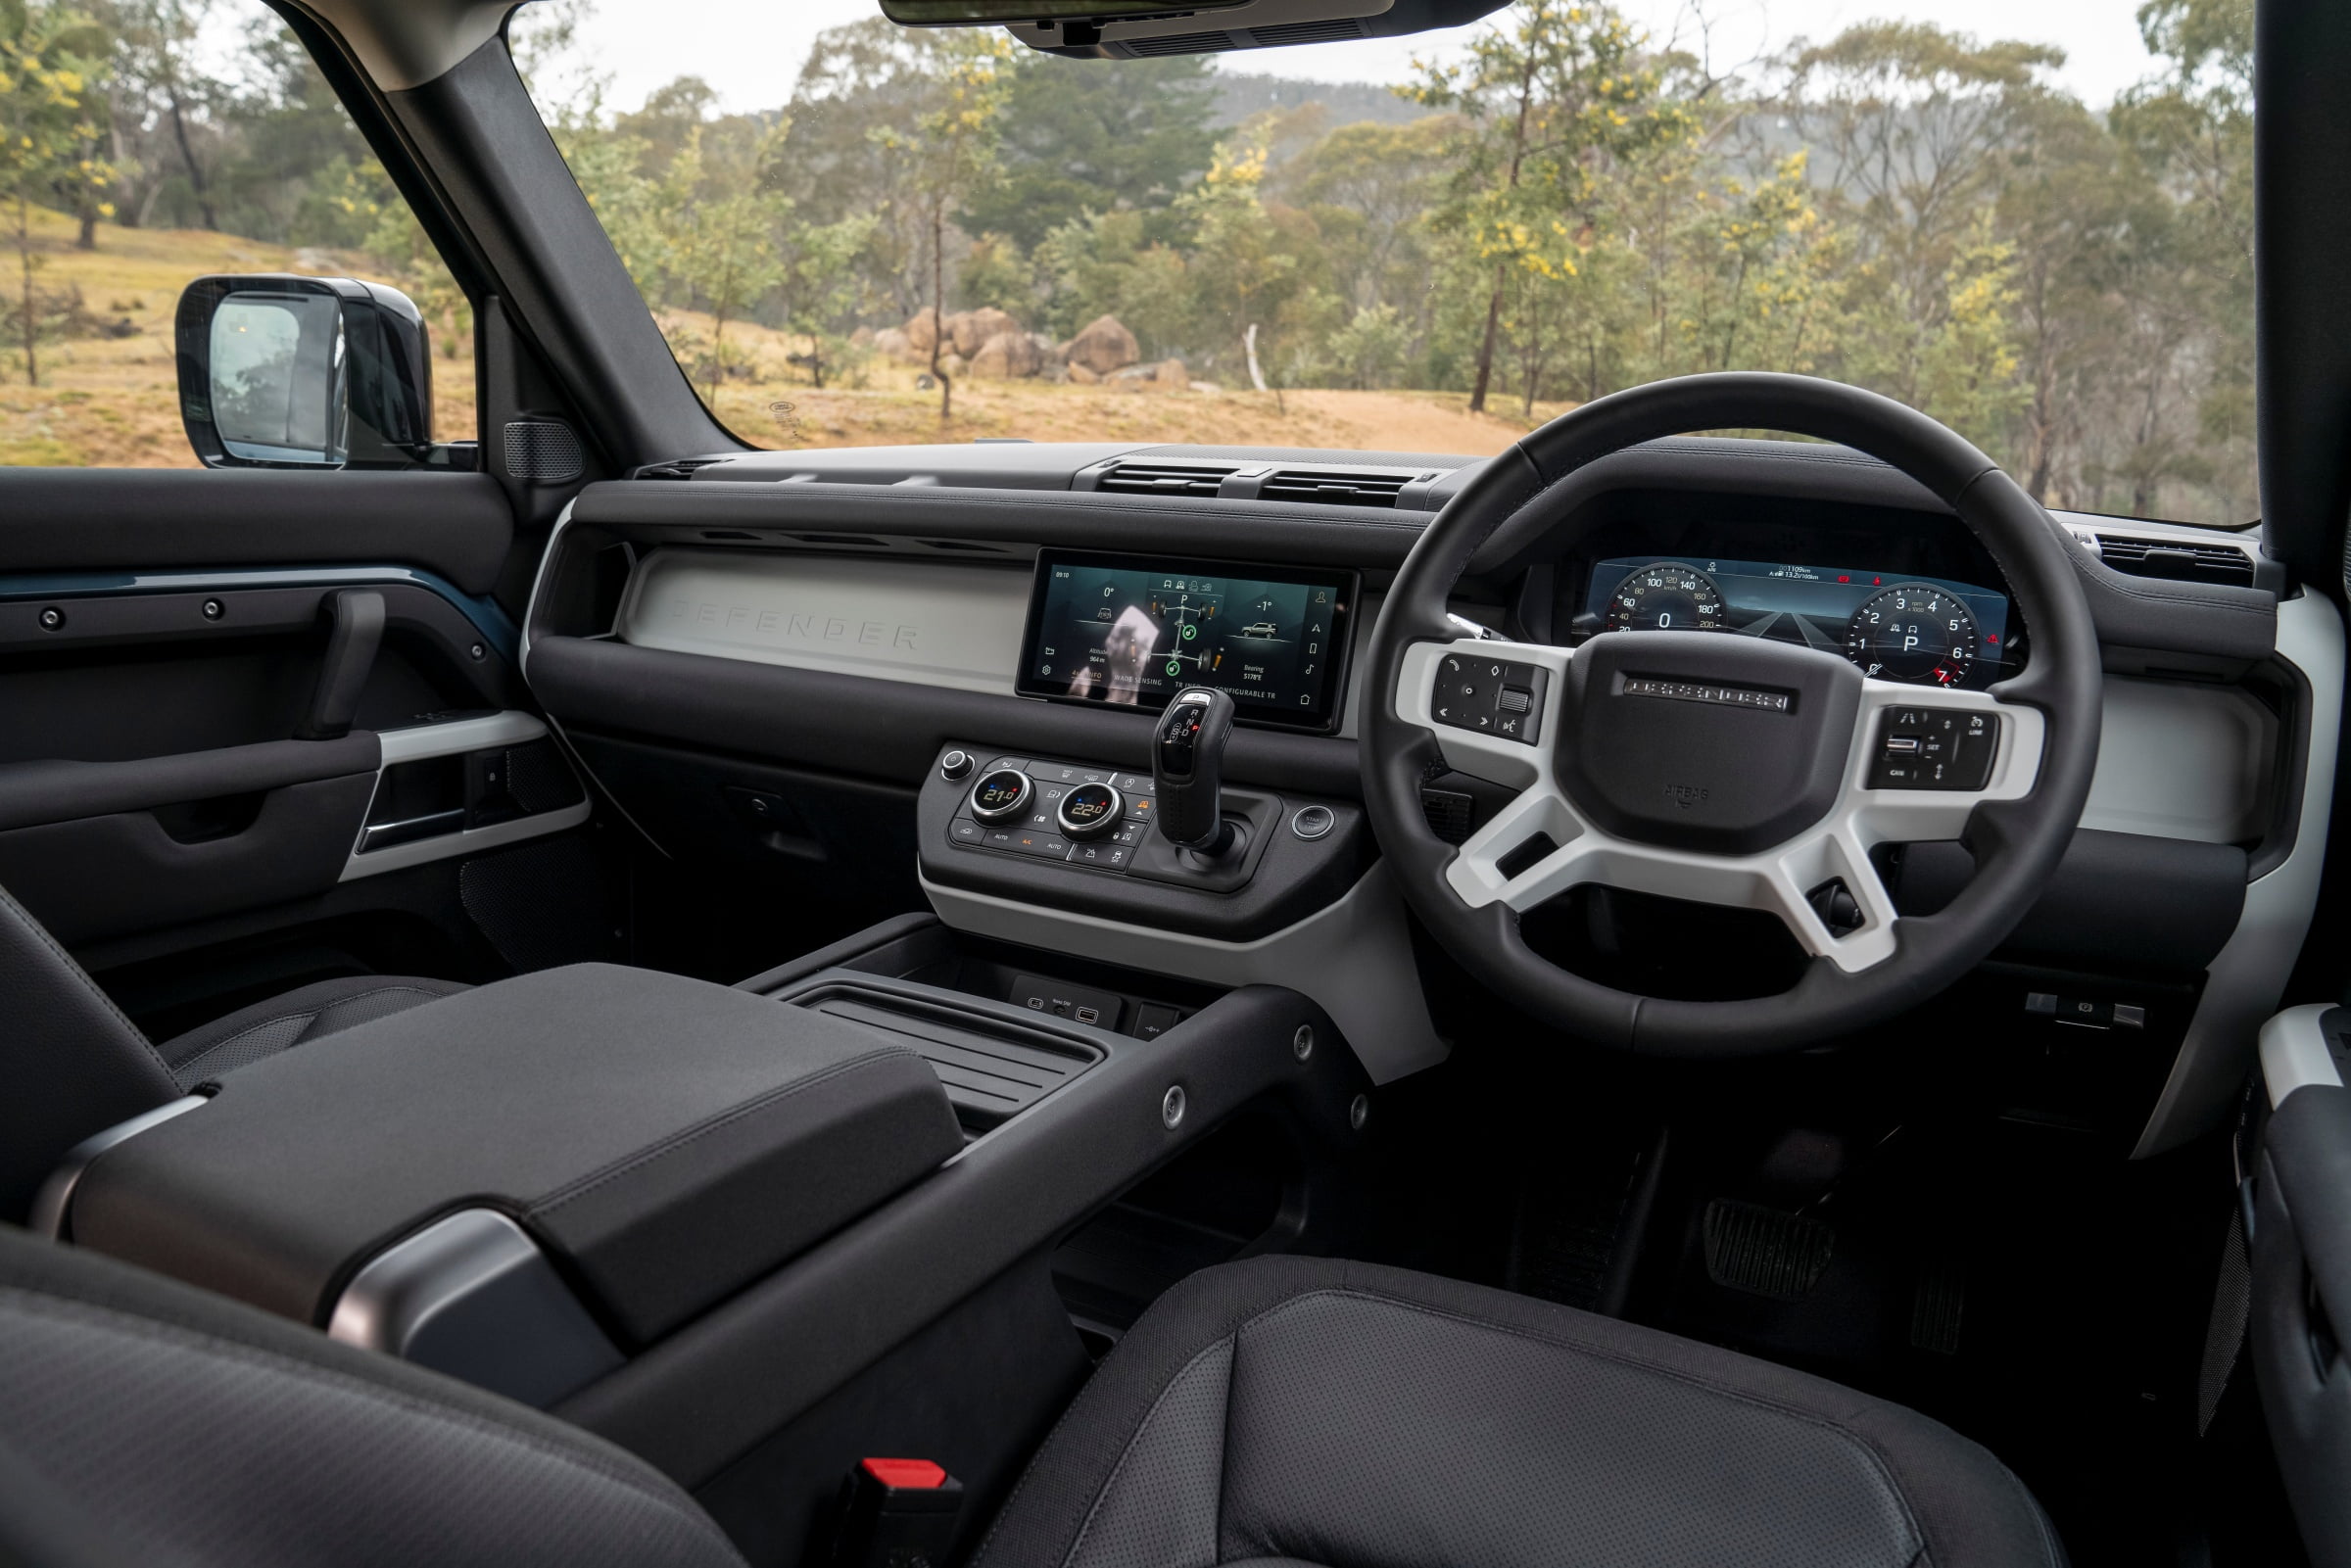 Land Rover Defender 110 interior